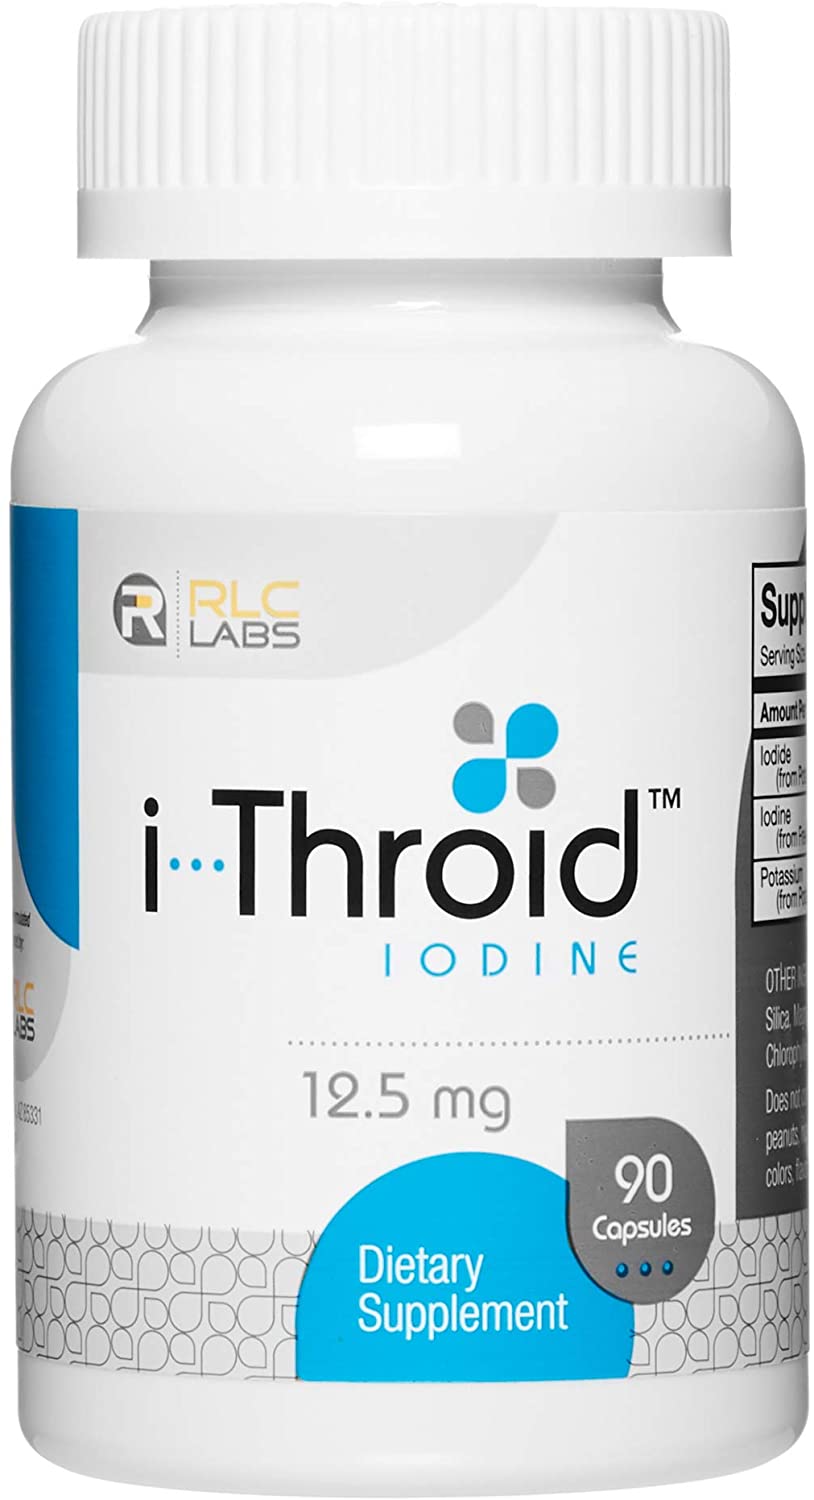 RLC Labs i-Throid Iodine 12.5 mg - 90 Capsules - ePothex